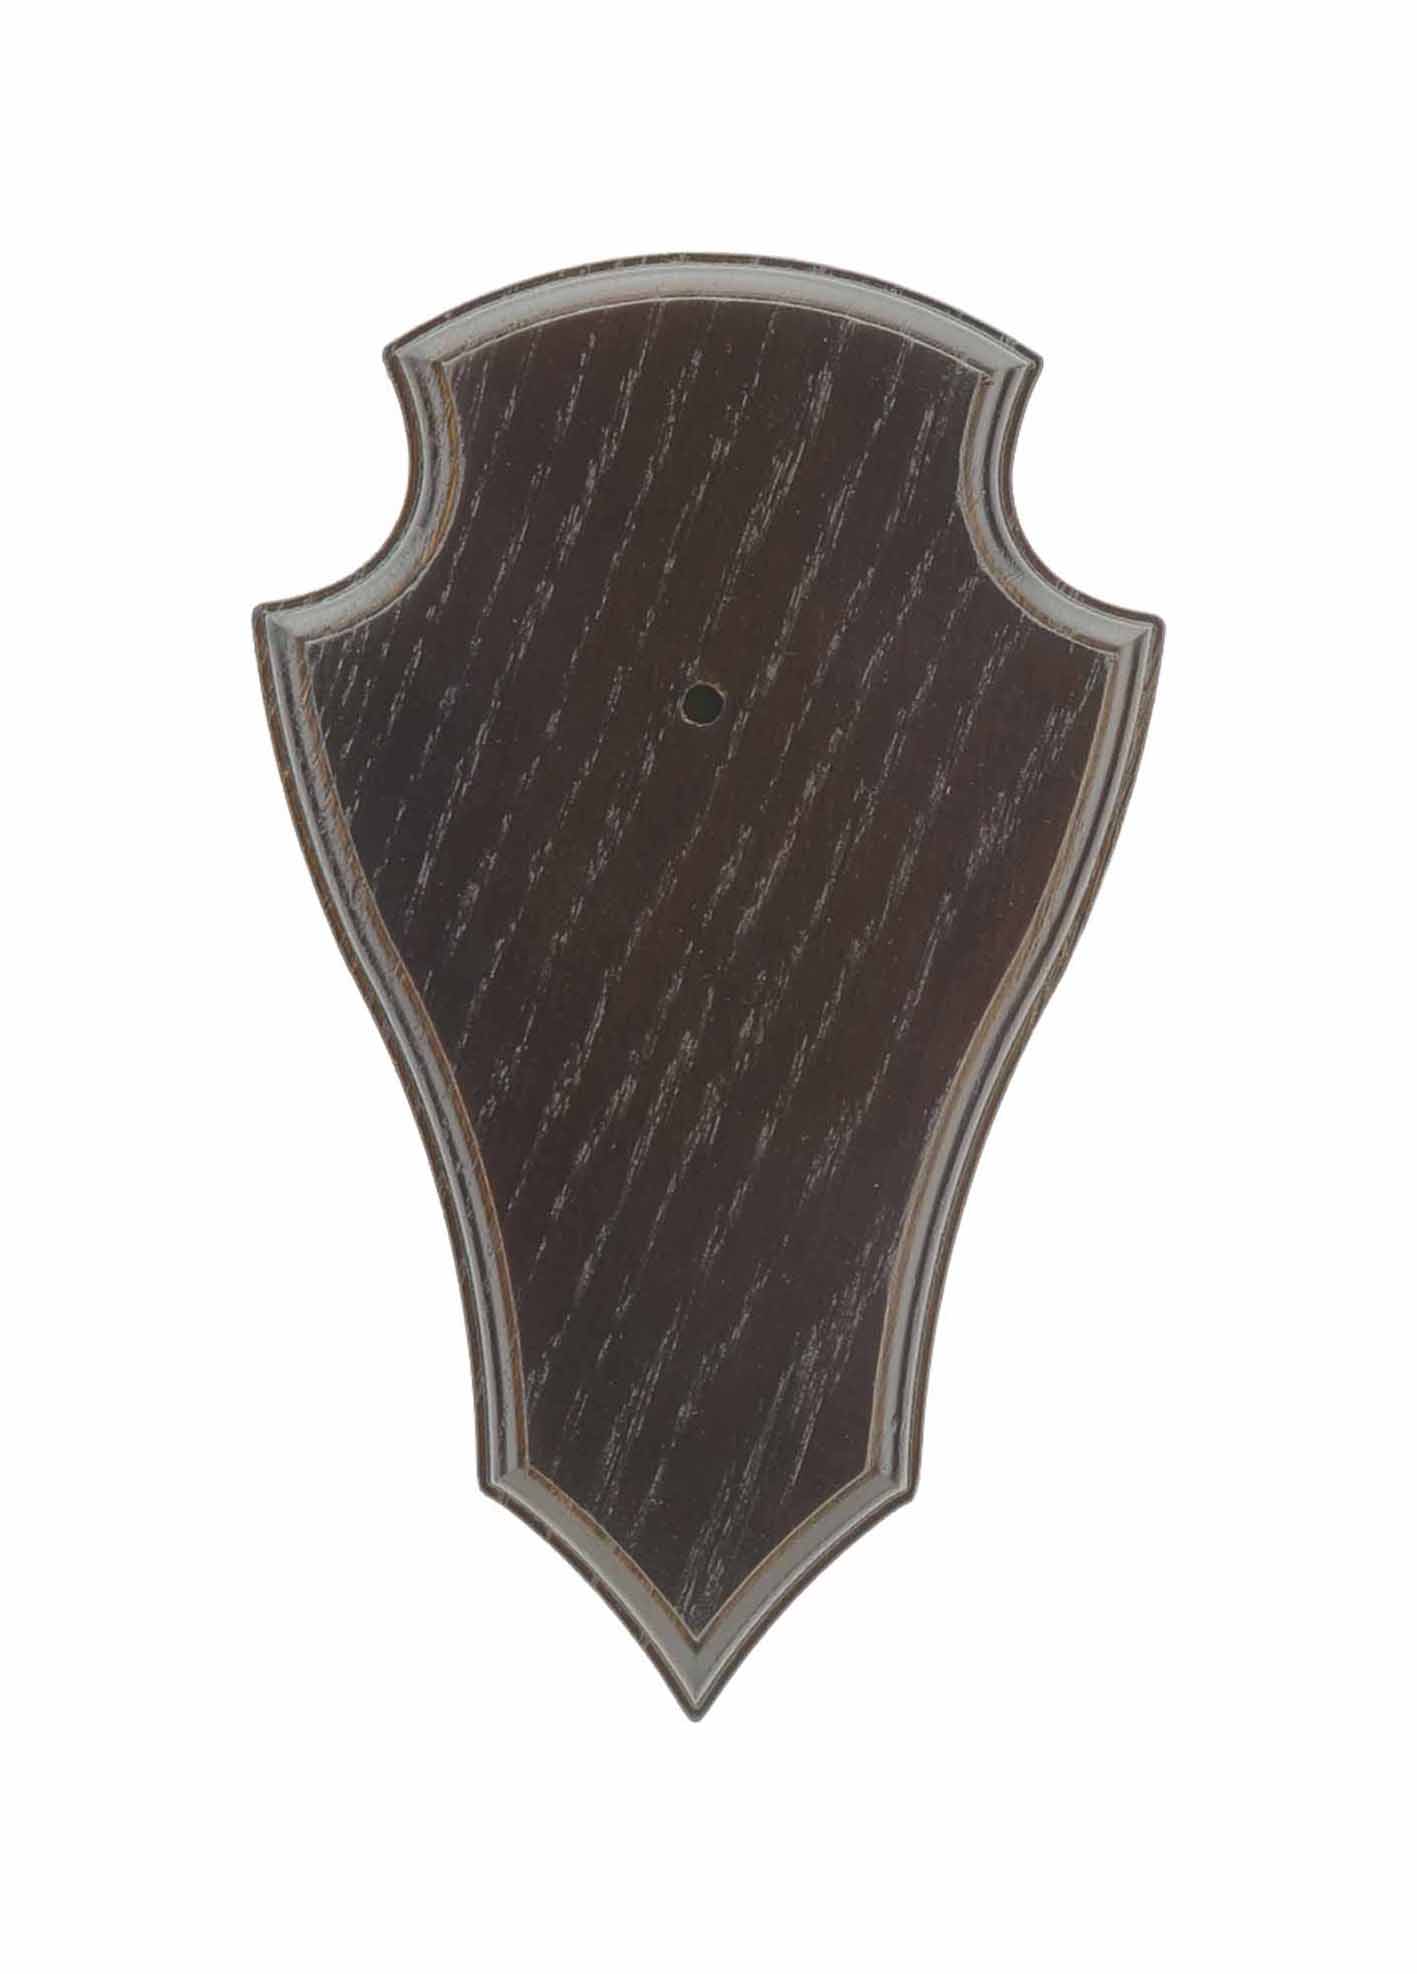 Oak Deer Trophy Plate 2 - 22x13 cm Dark Set 5pcs. with metal clamps